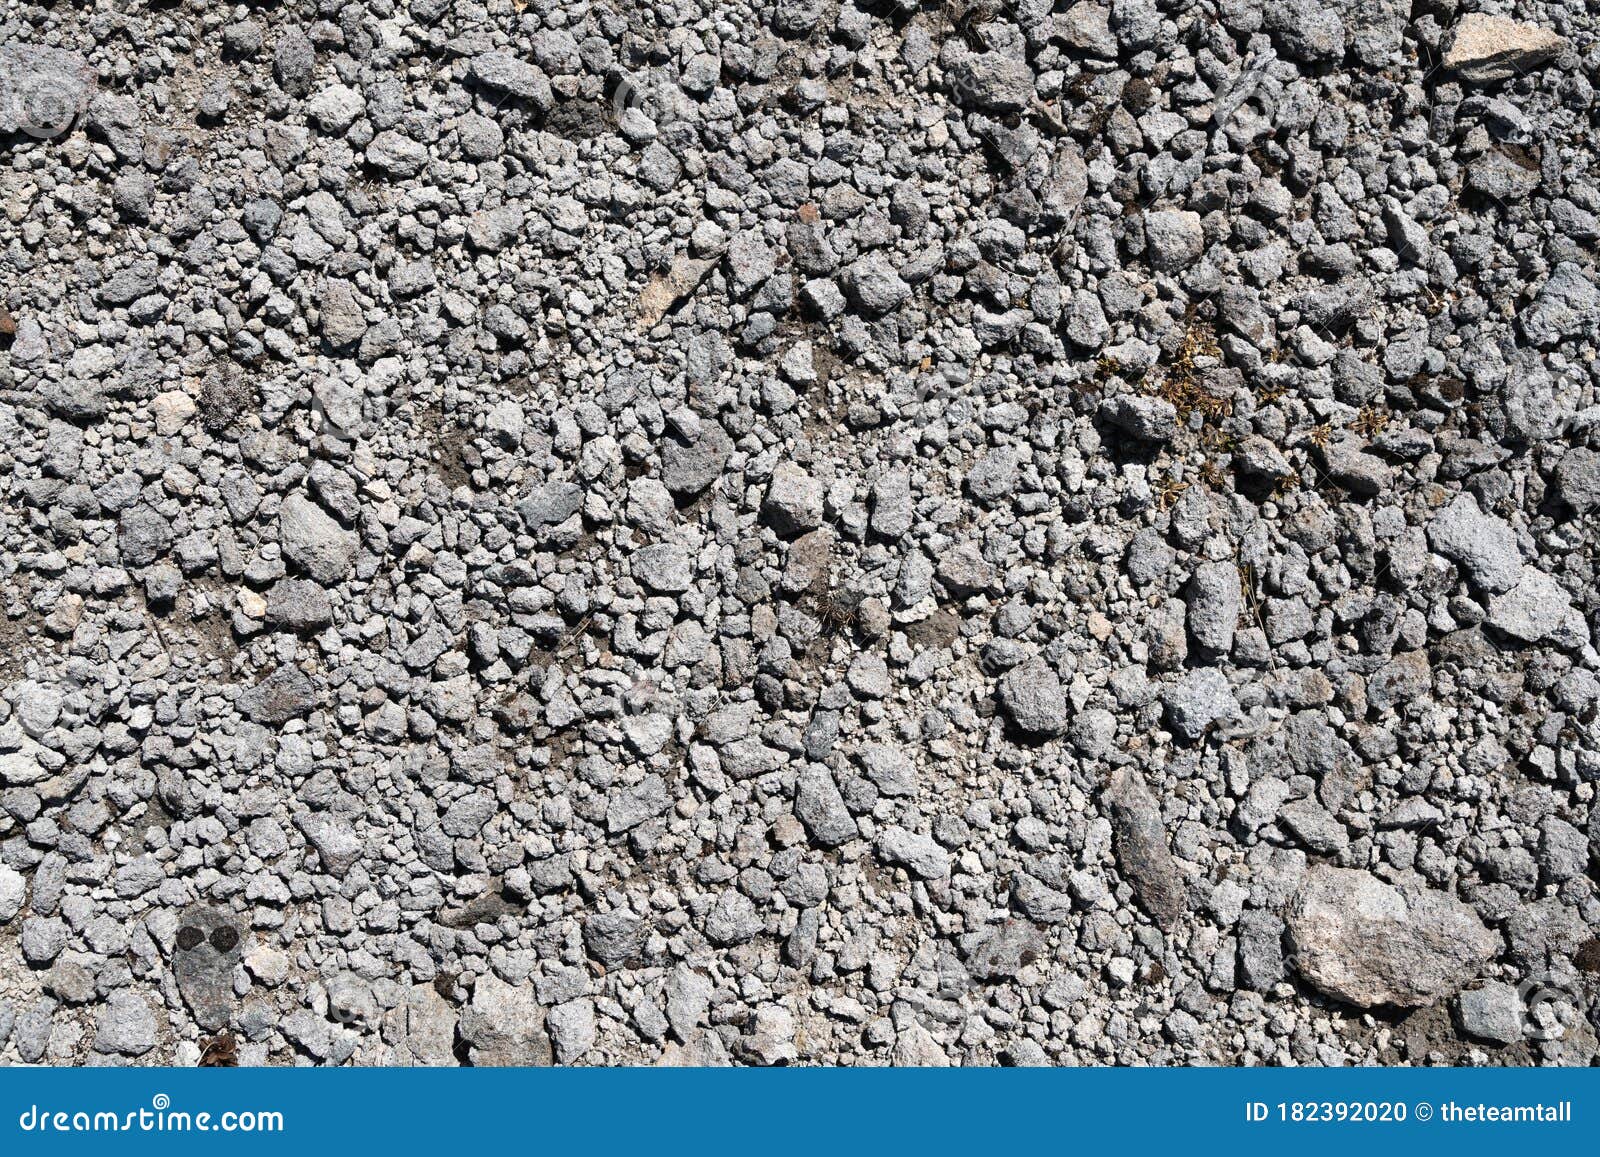 closeup detail of grey volcanic gravel